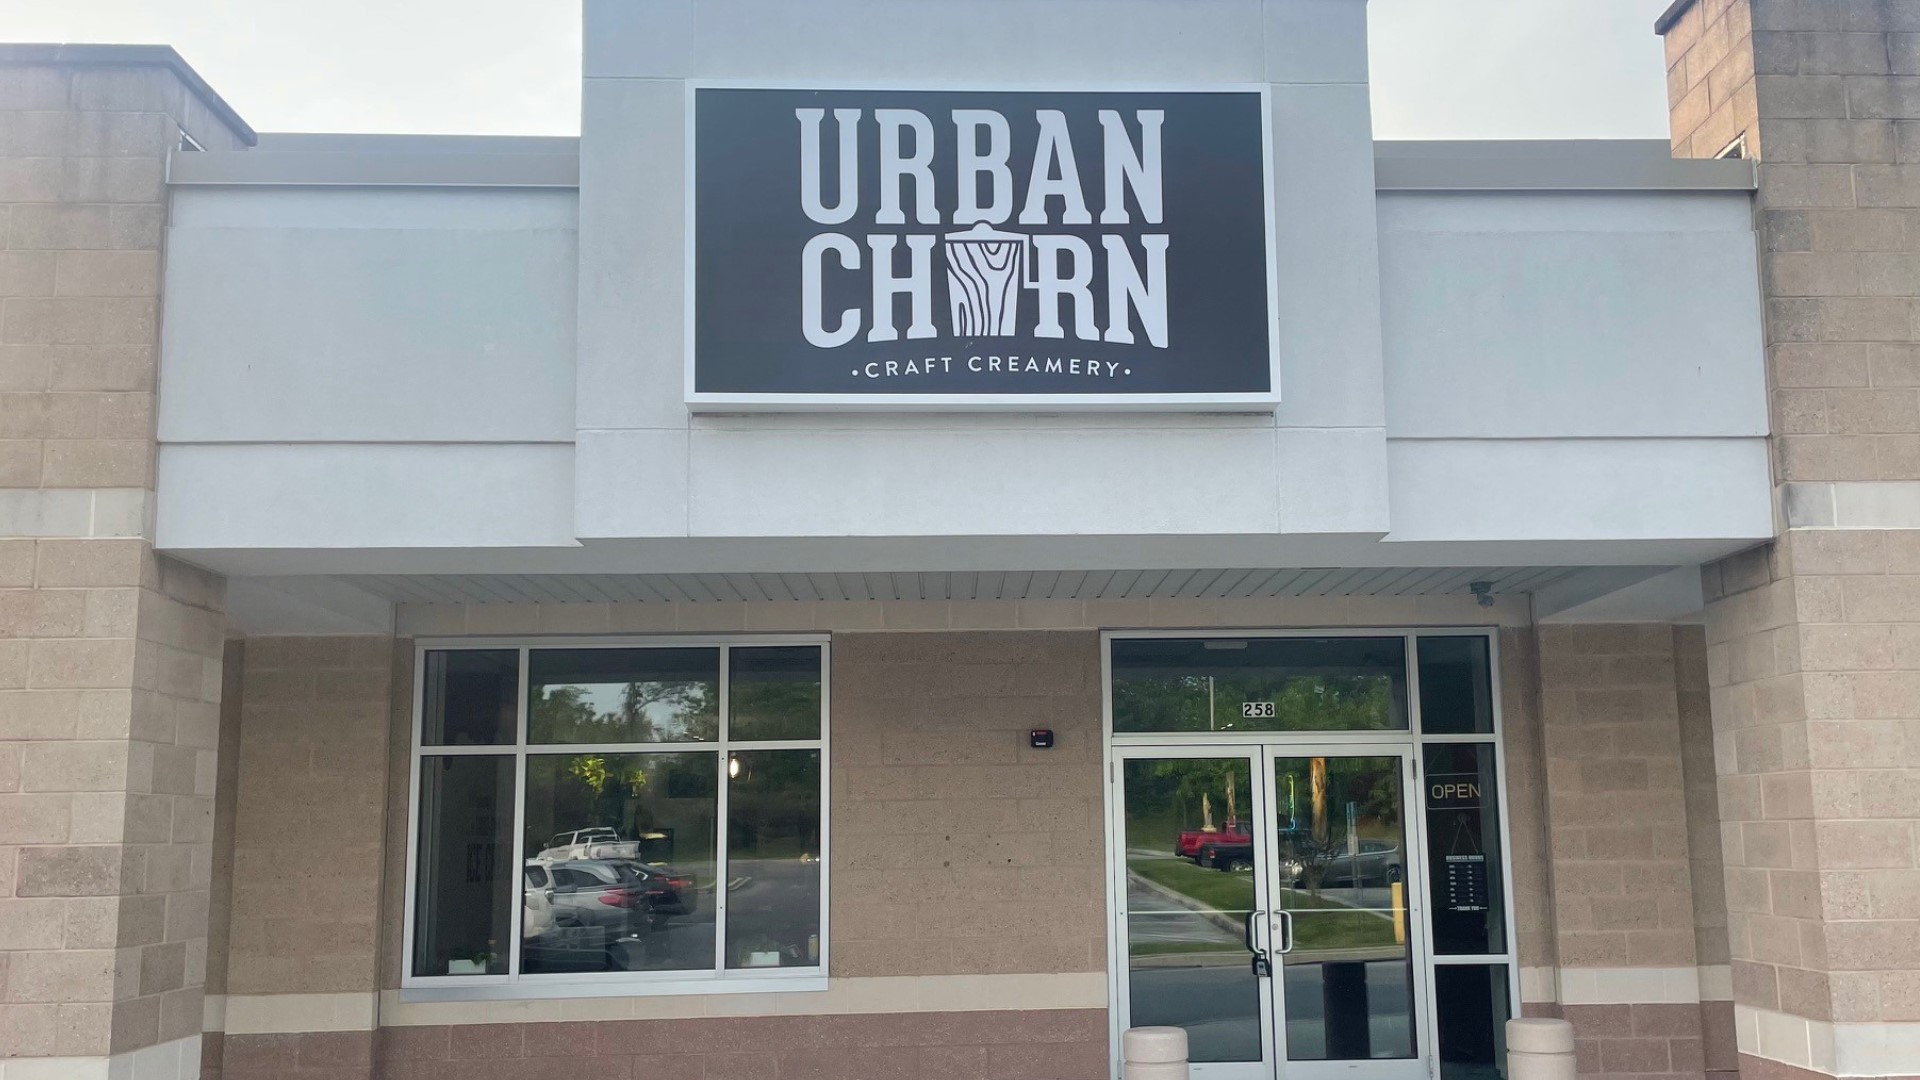 Urban Churn Craft Creamery is opening a new location in Carlisle.